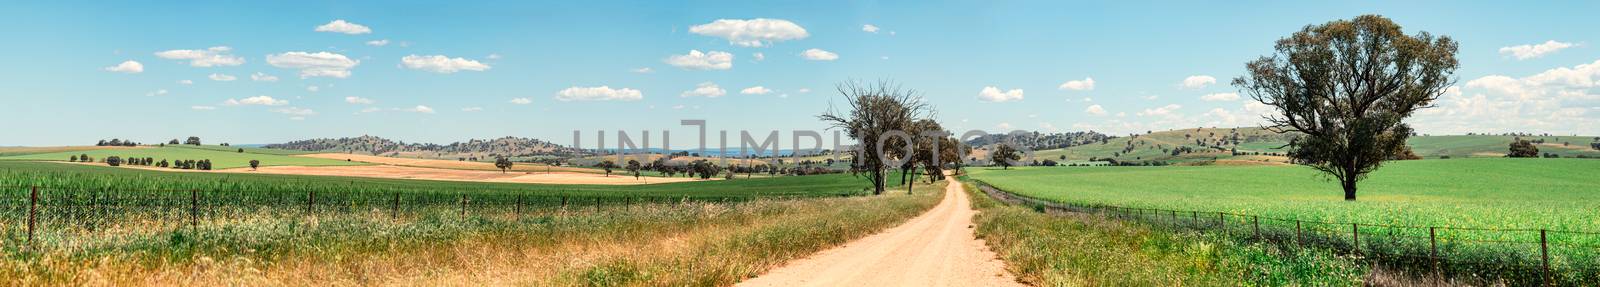 Rural countryside panorama by lovleah